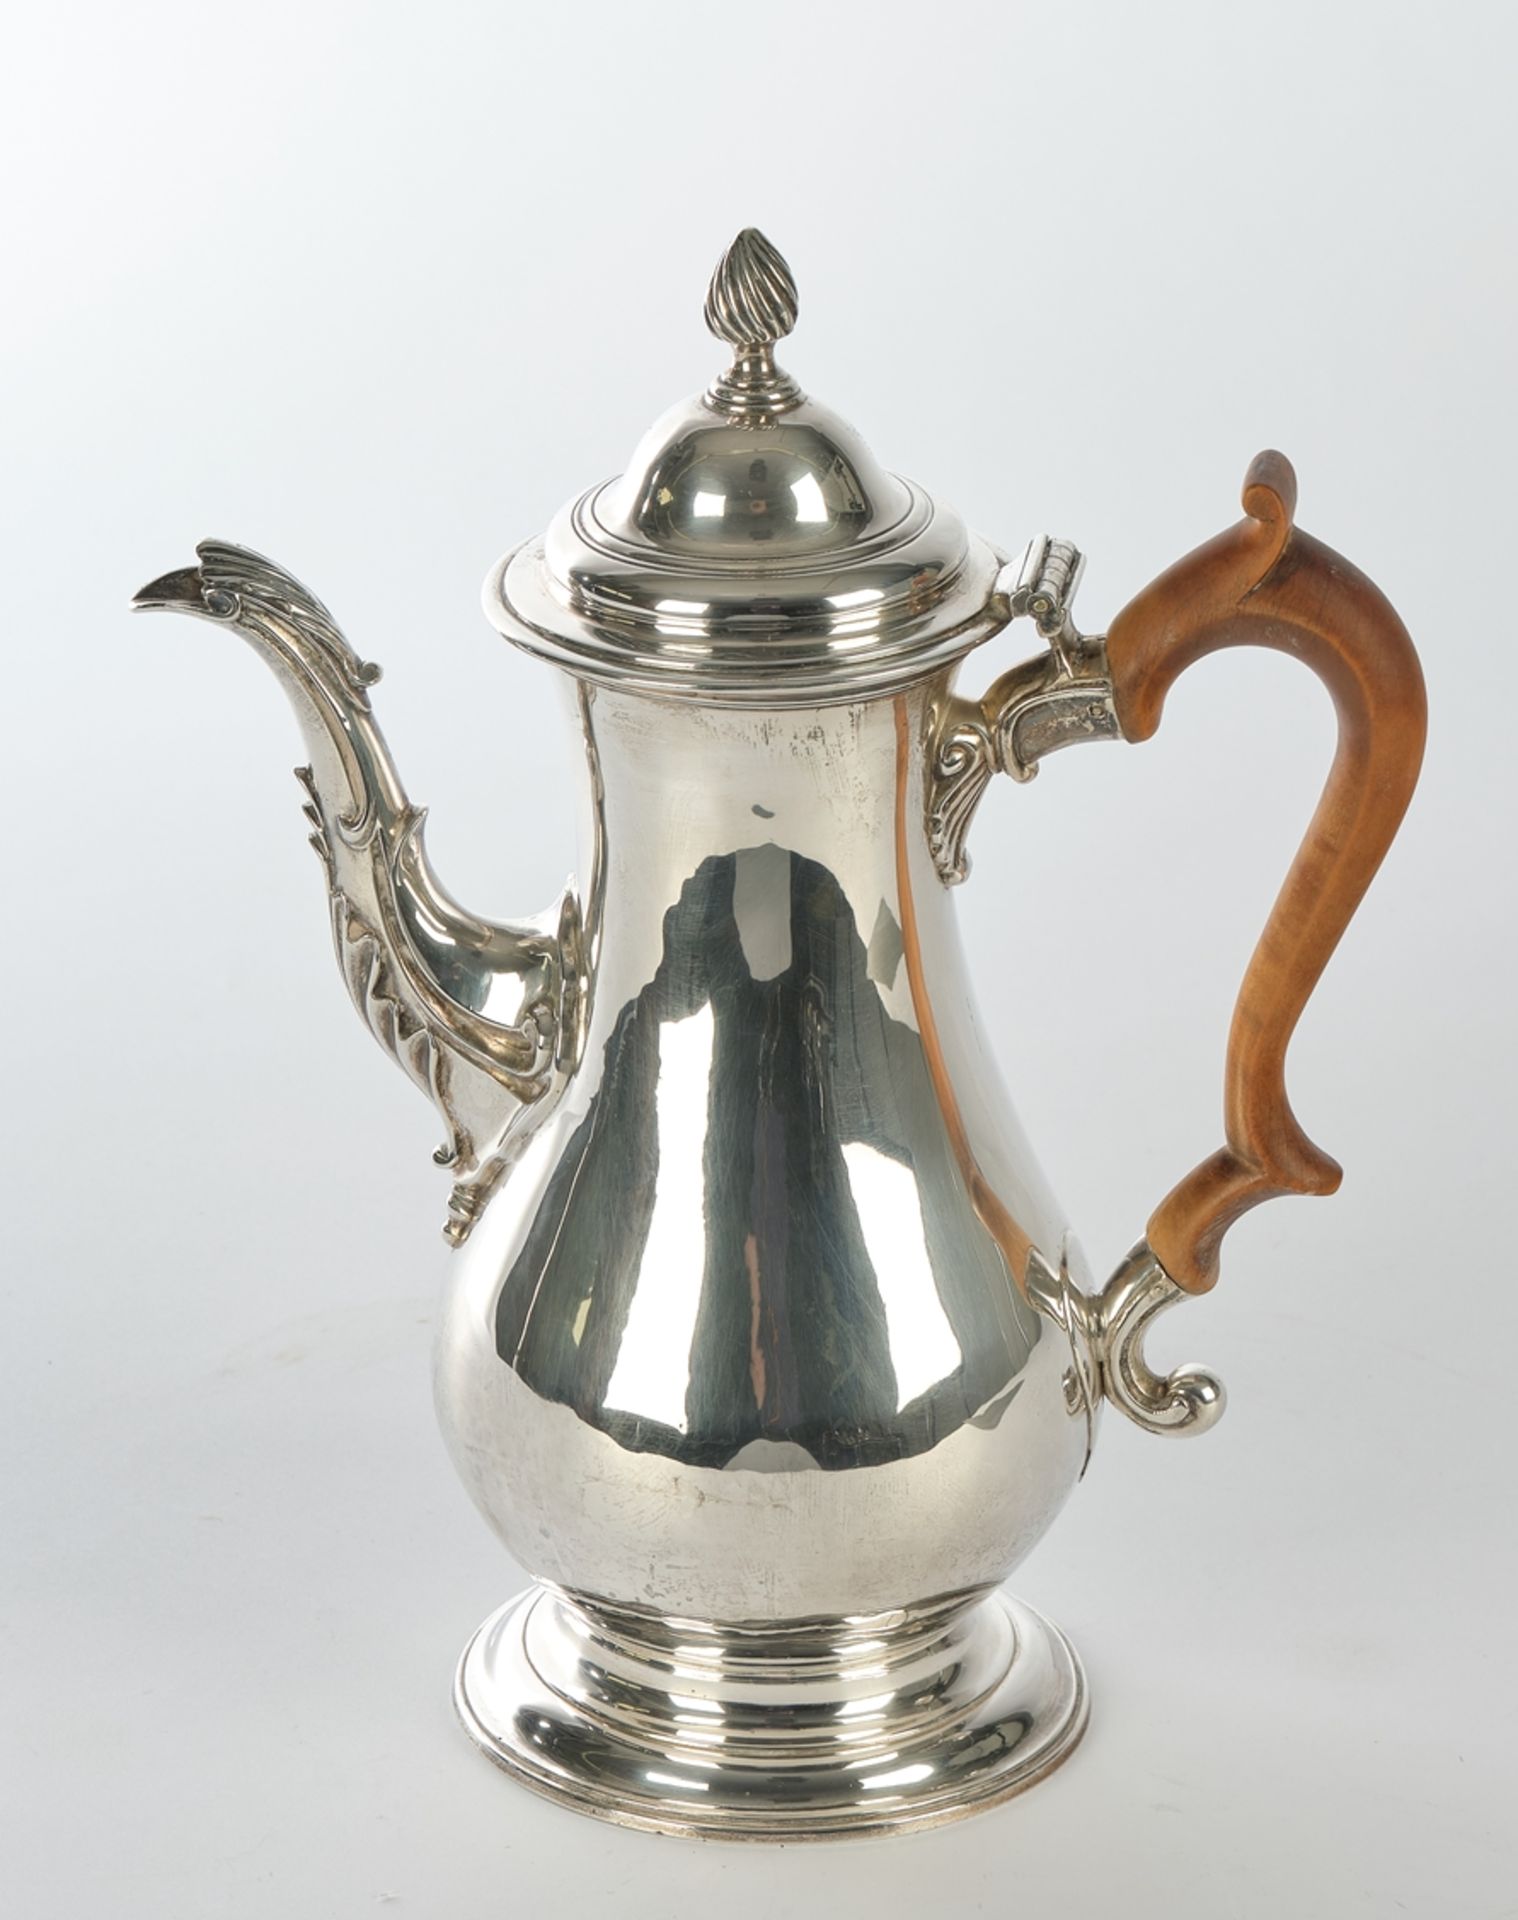 Coffee pot, silver 925, London, 1773, Ebenezer Coker, pear-shaped vessel on a moulded round foot, c